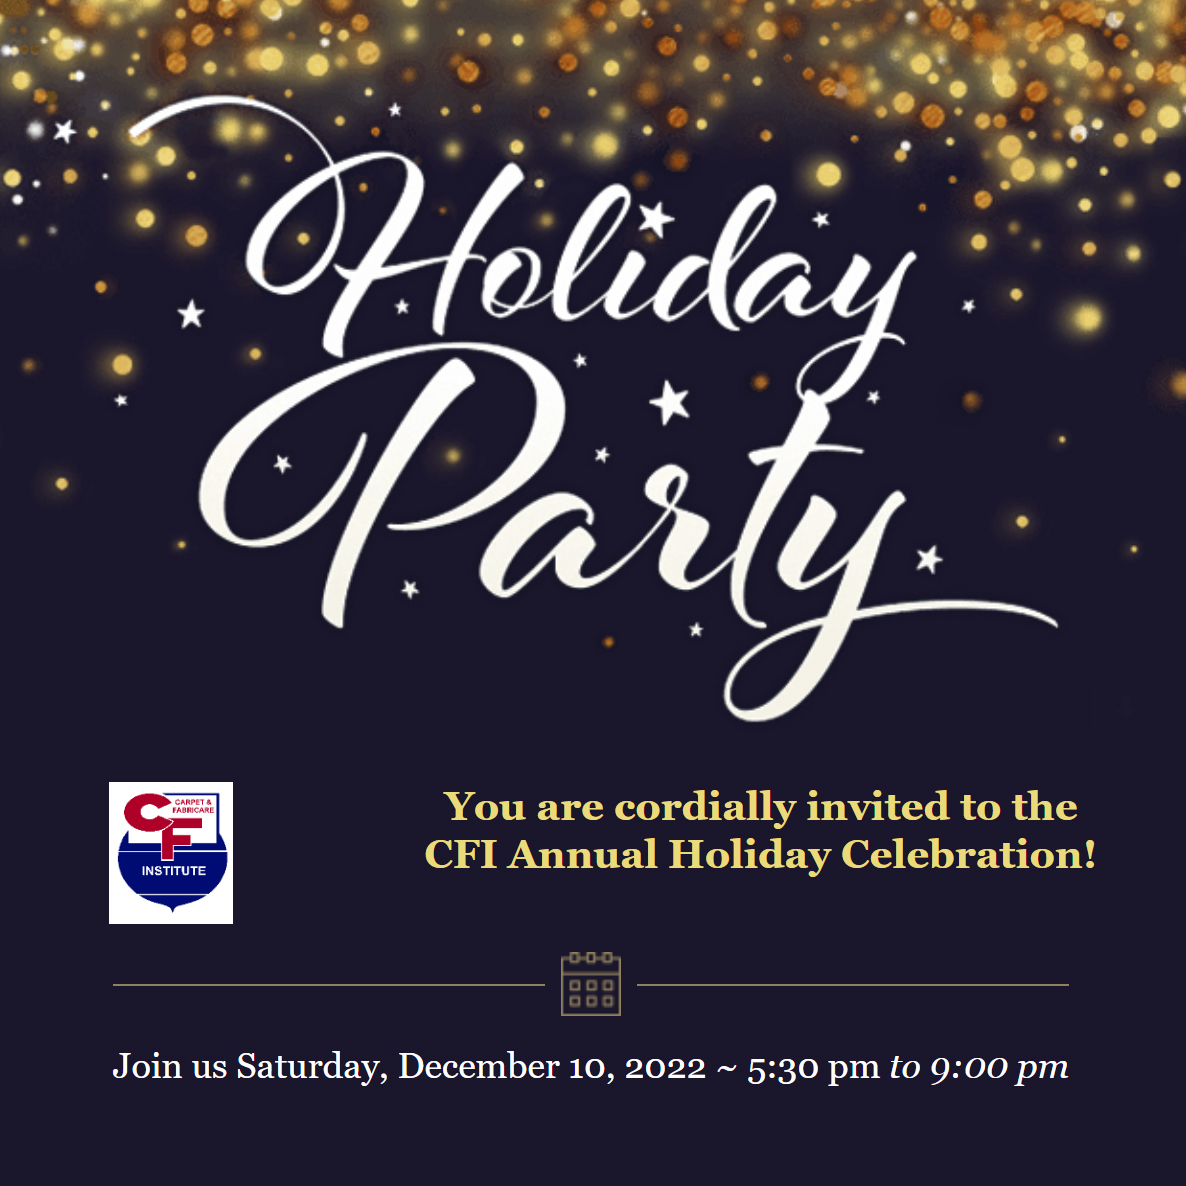 CFI Annual Holiday Celebration